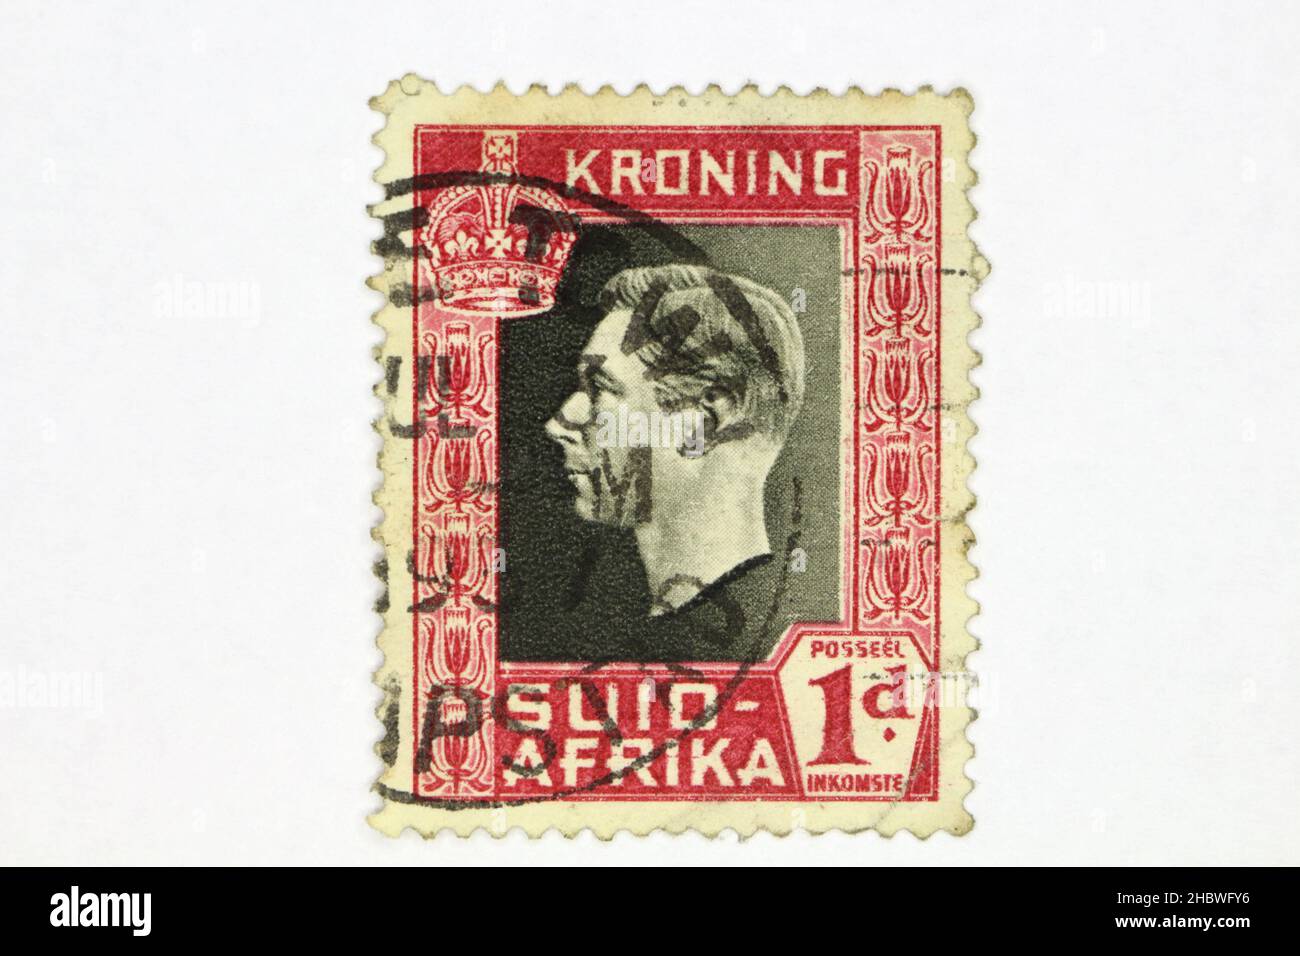 South africa - Suid Afrika postage stamp King George VI coronation (kroning) Stock Photo